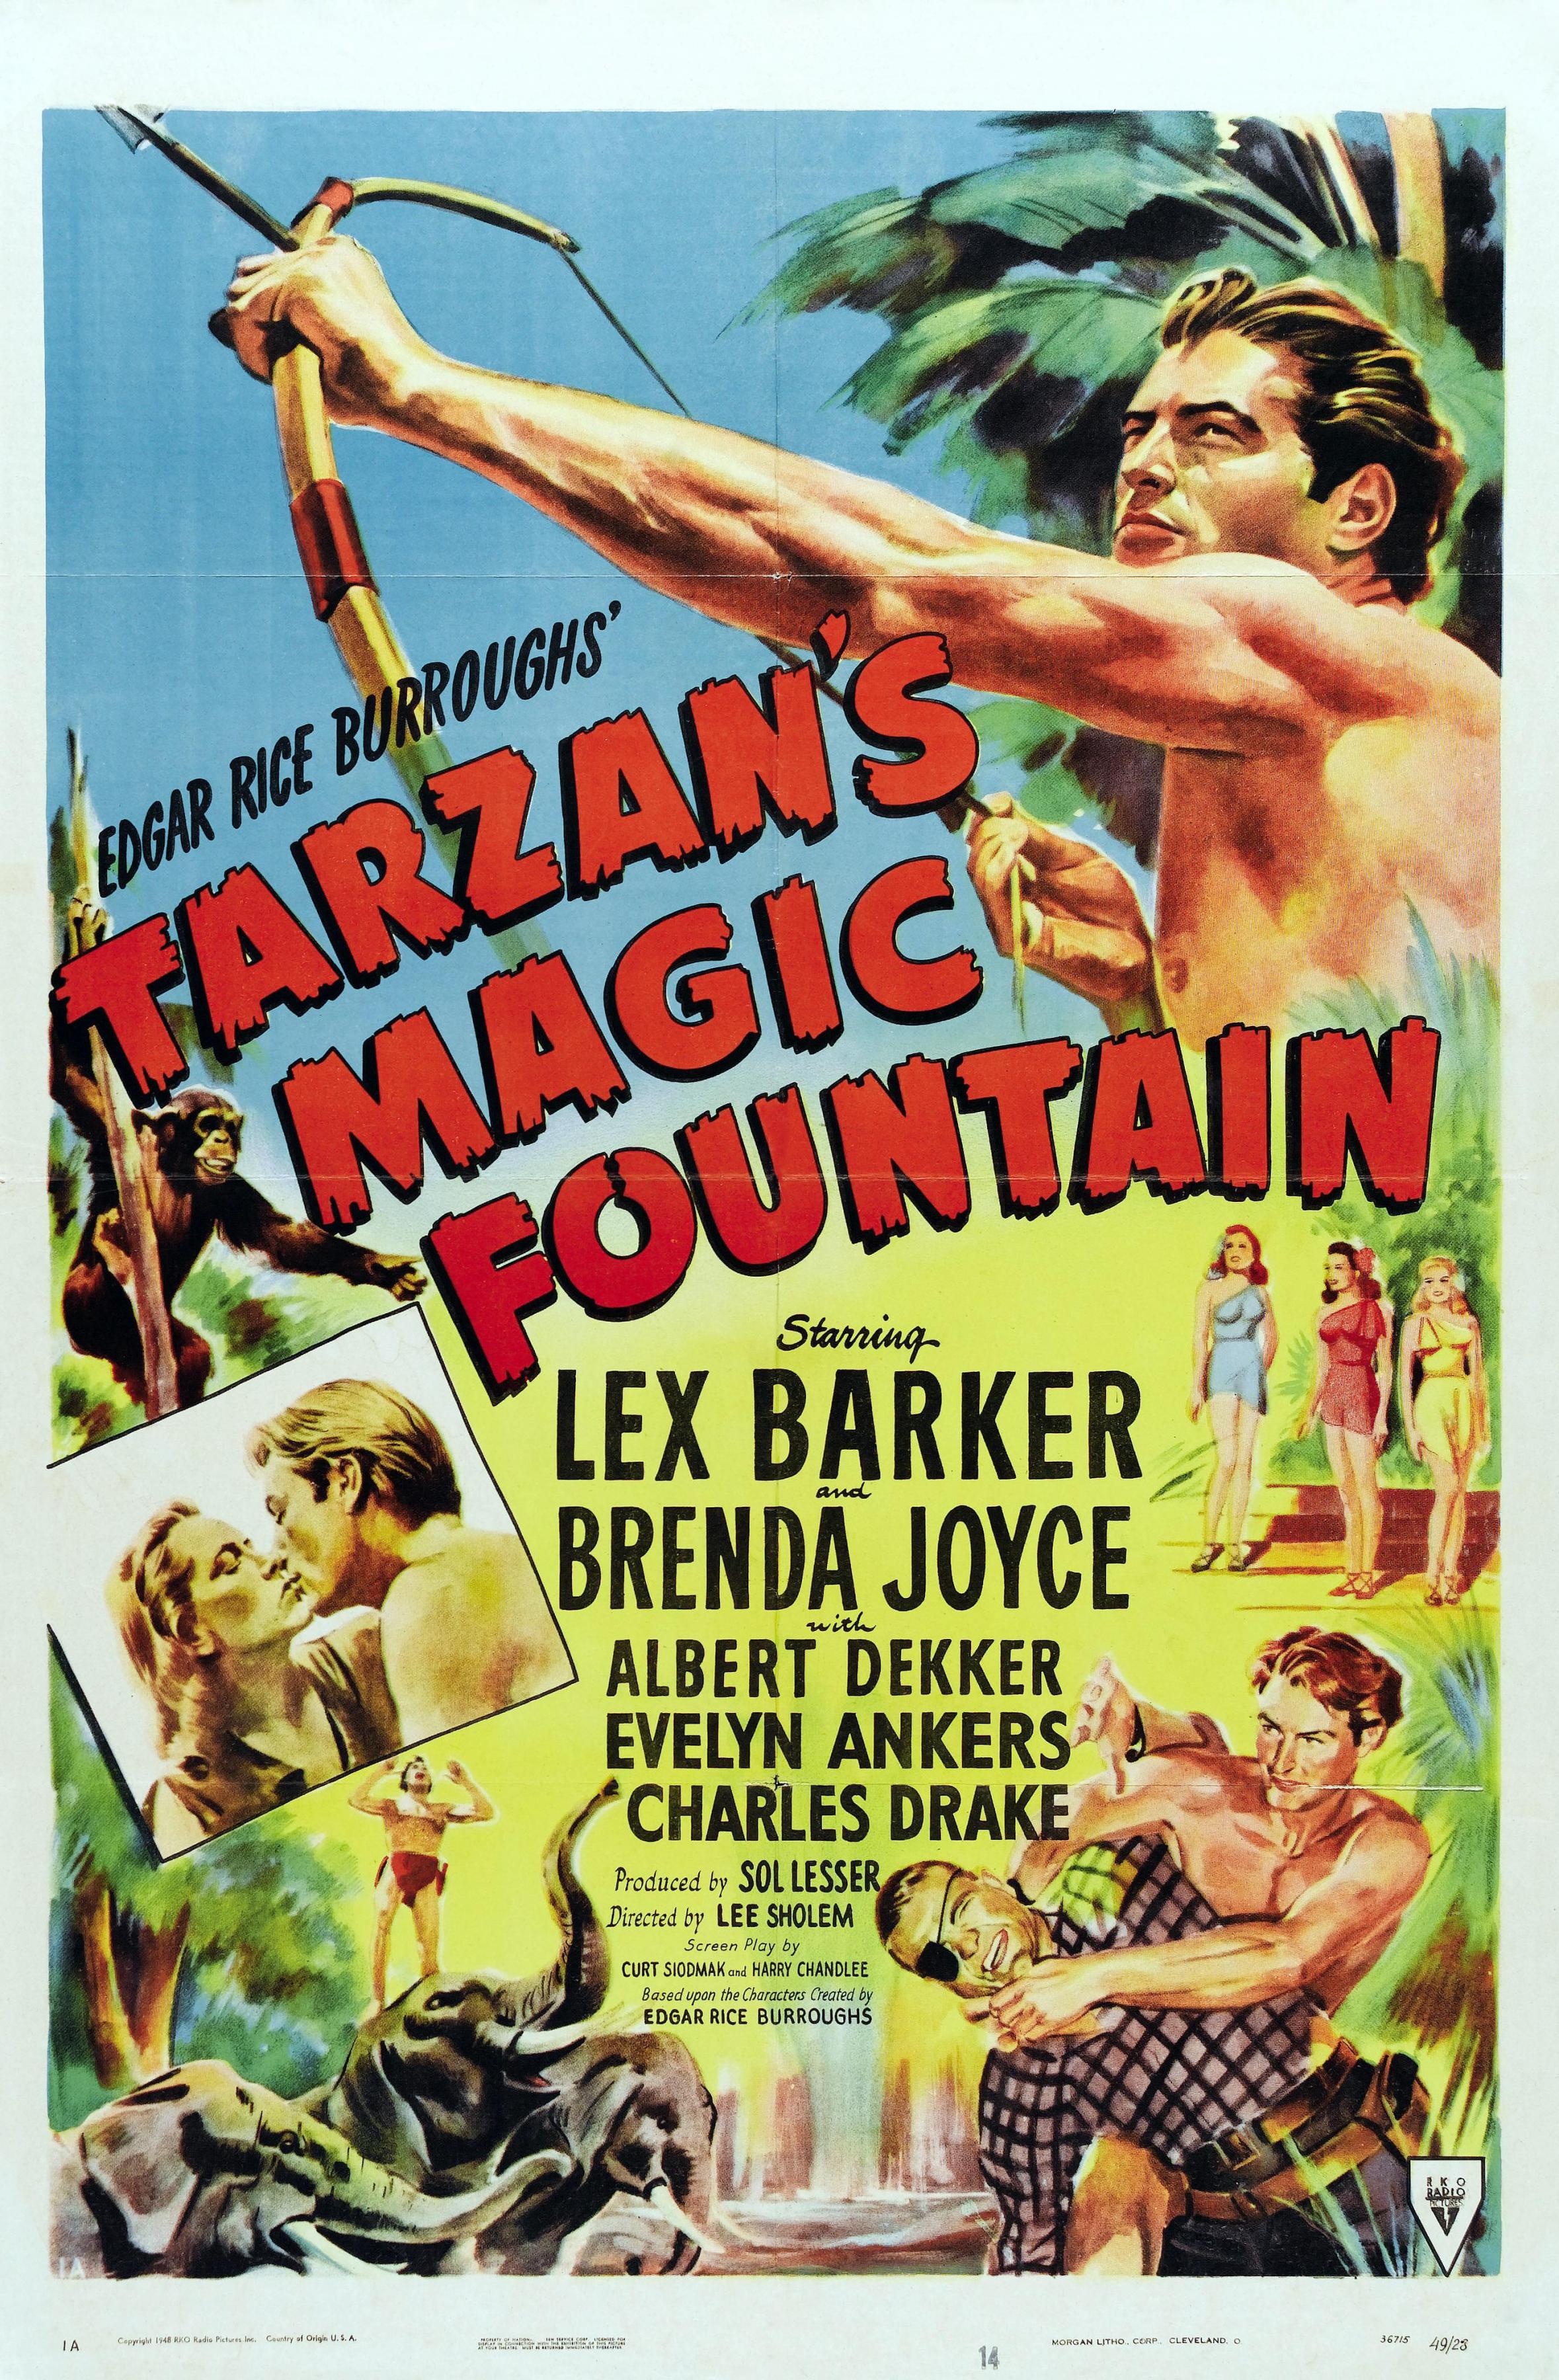 Постер фильма Tarzan's Magic Fountain